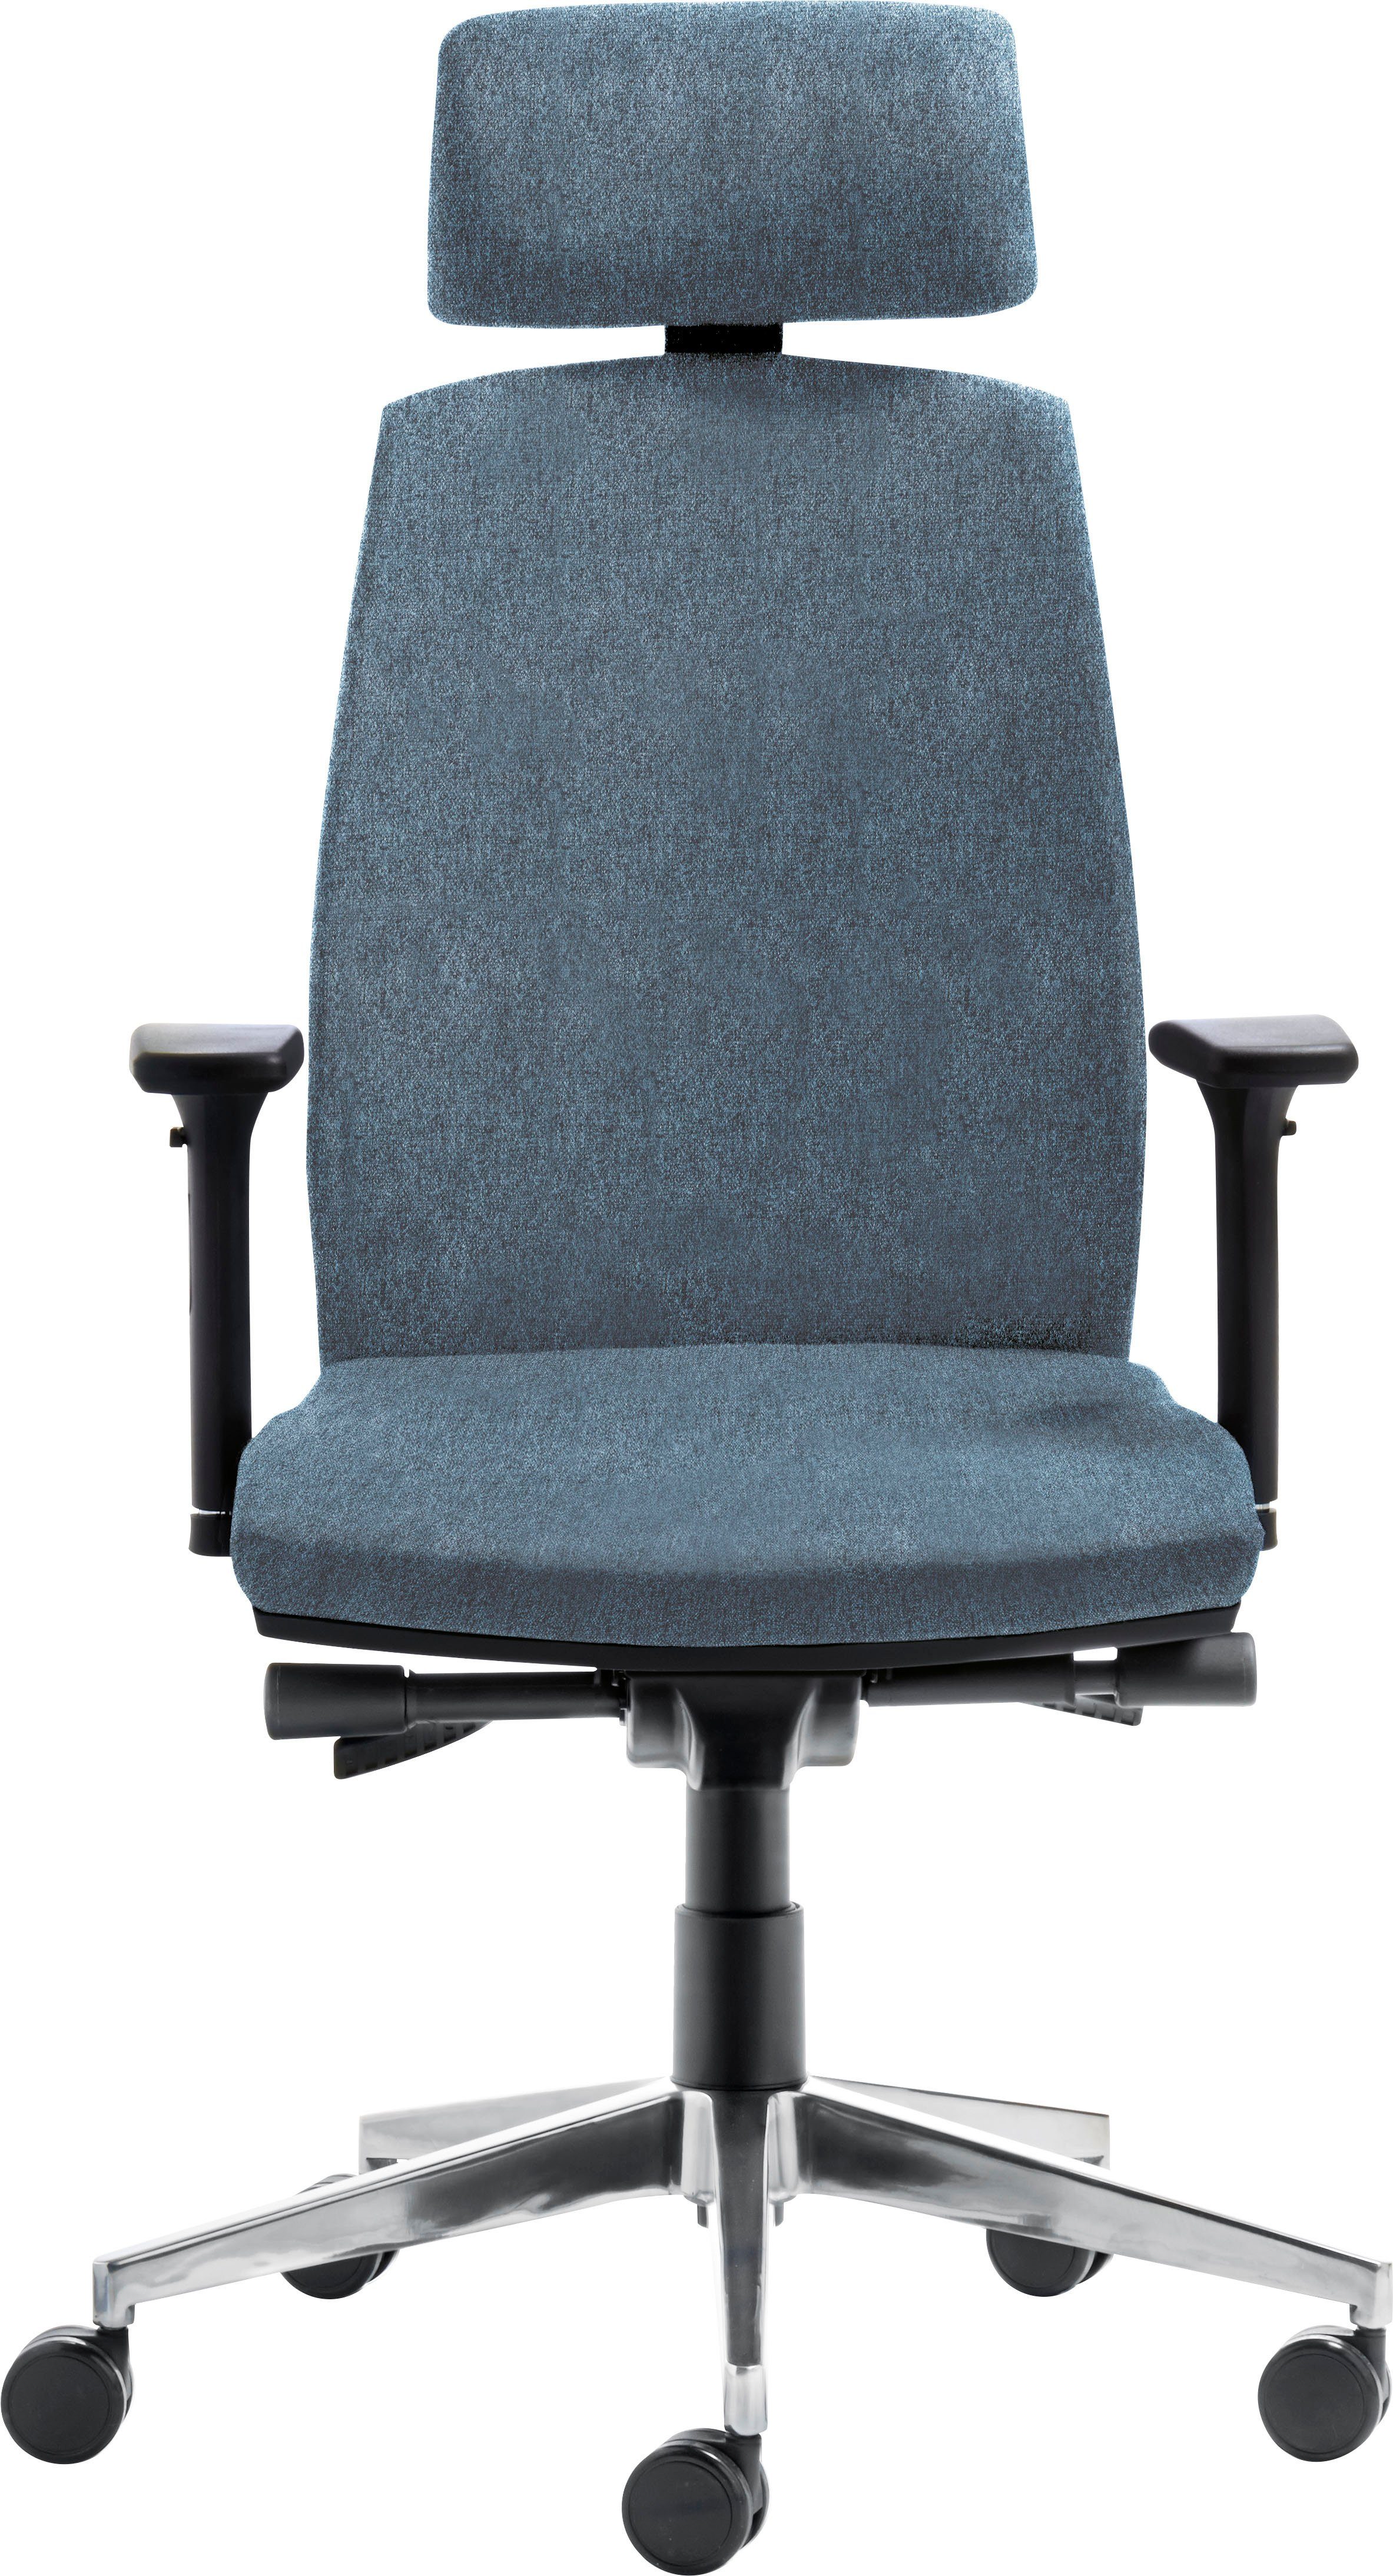 Drehstuhl Kopfstütze LINE, Sitzmöbel verstellbare Chefsessel myCONTRACT Rückenhöhe Mayer verstellbar, 7-fach